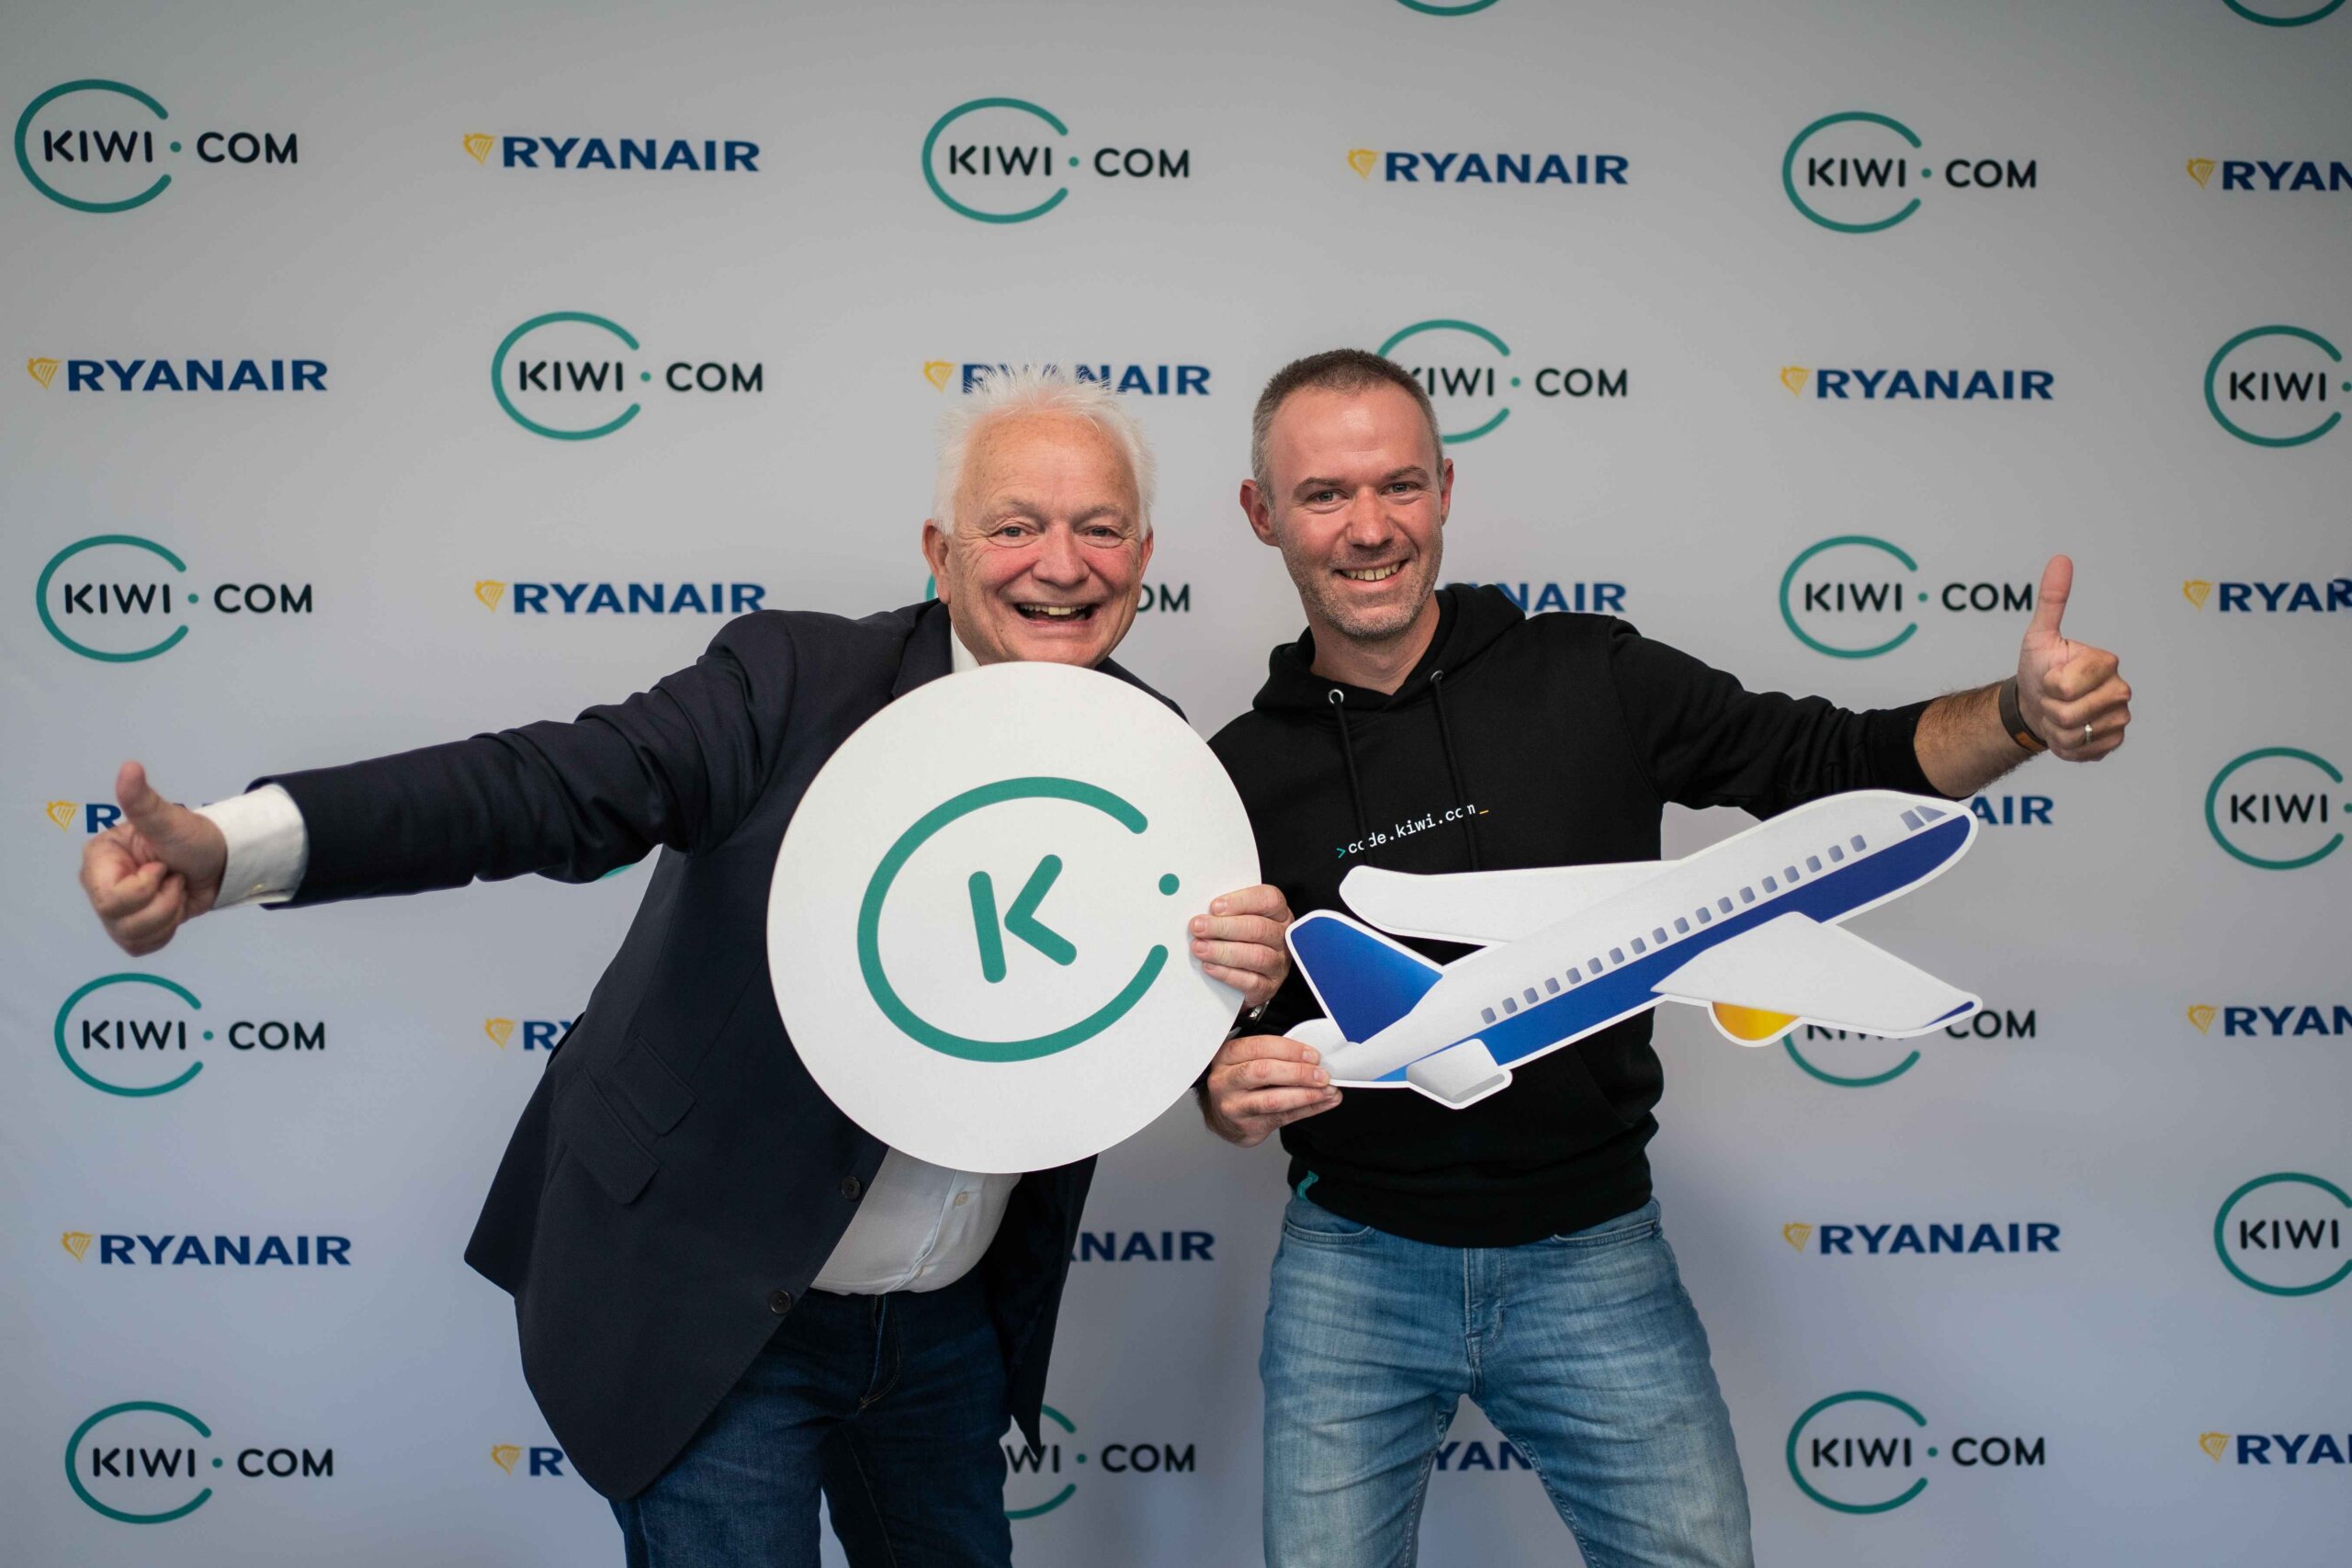 Ryanair and Kiwi Partnership Takes Off